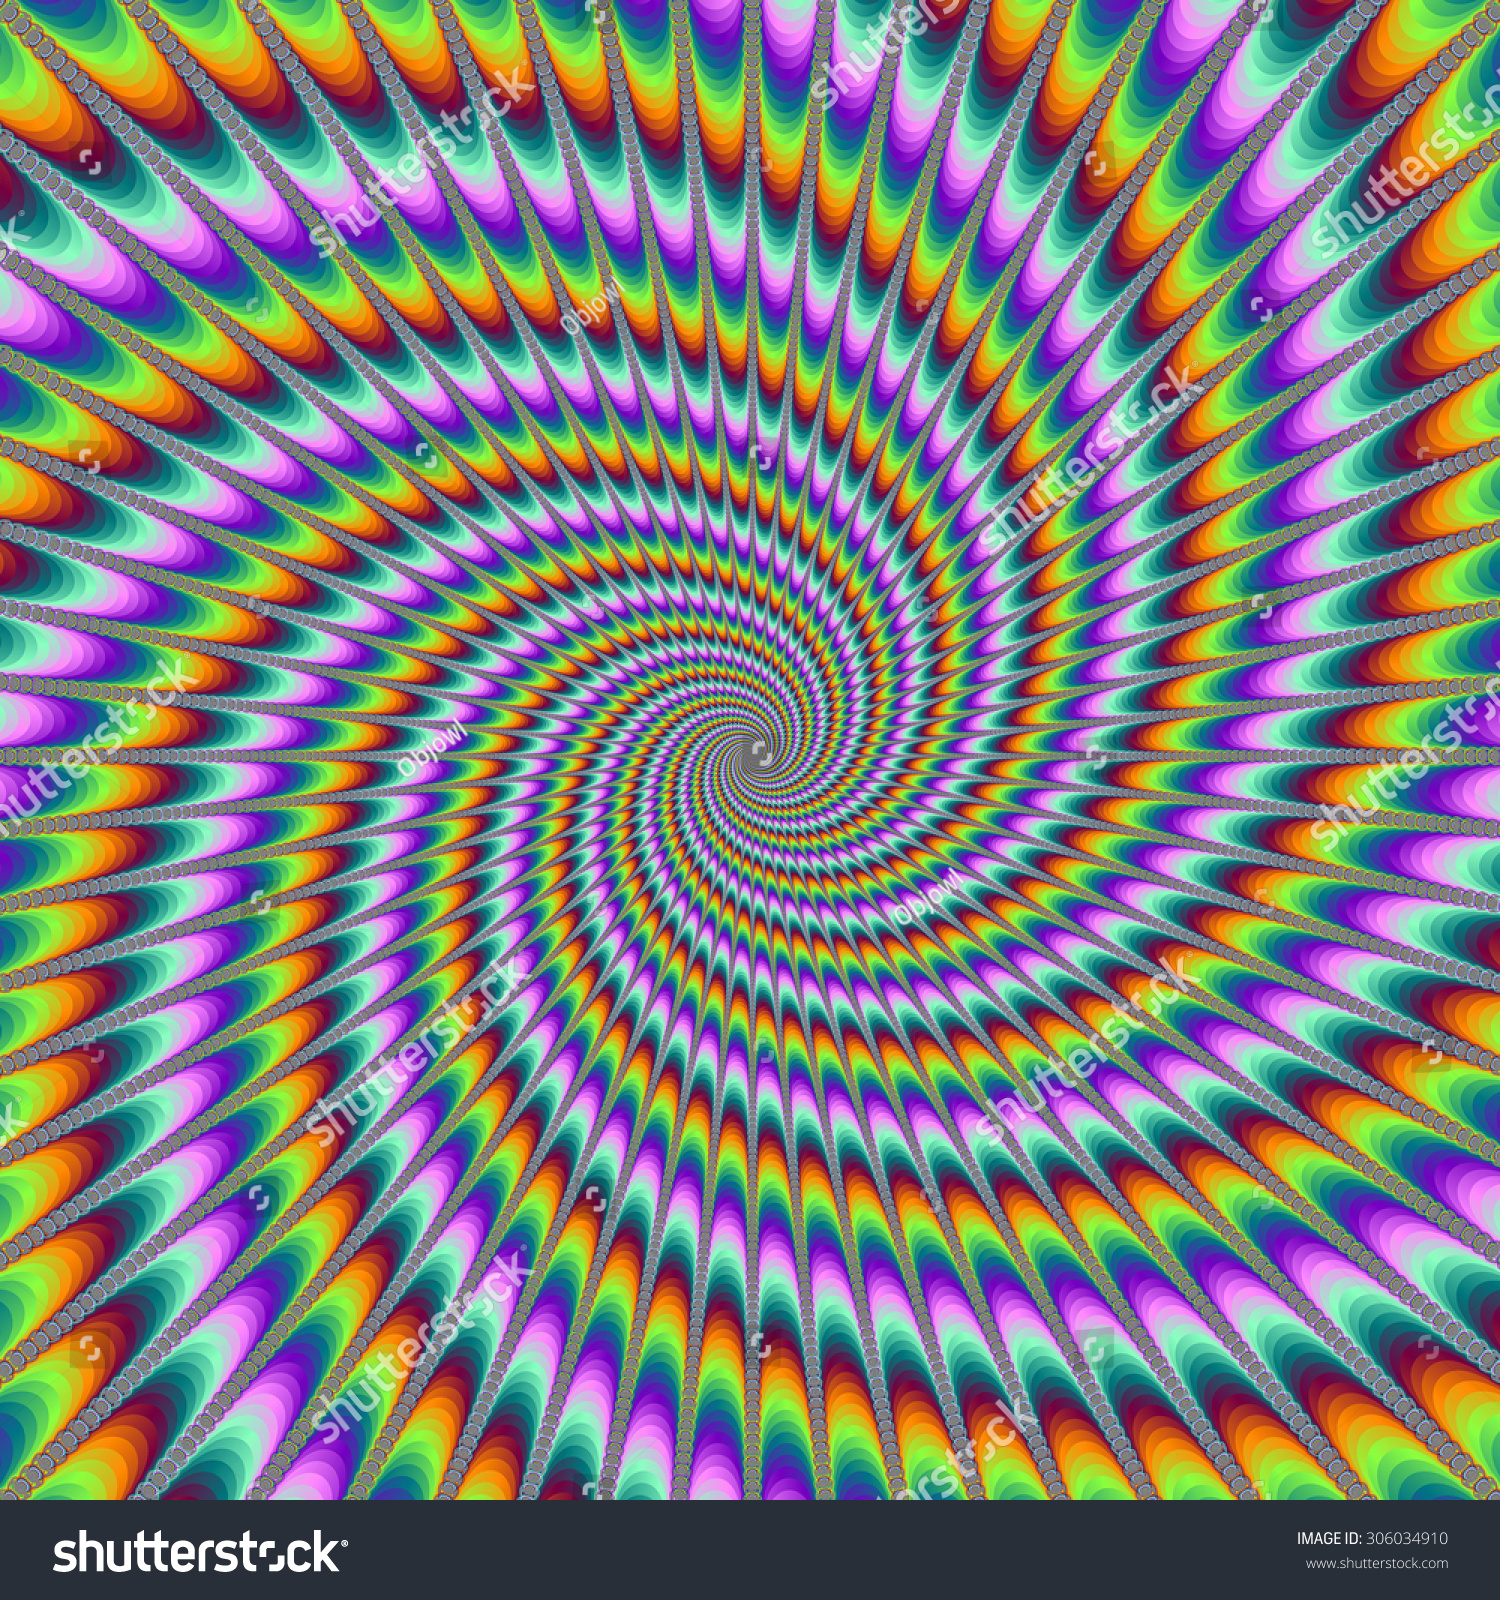 Dizzy Swirl Digital Abstract Fractal Image Stock Illustration 306034910 ...